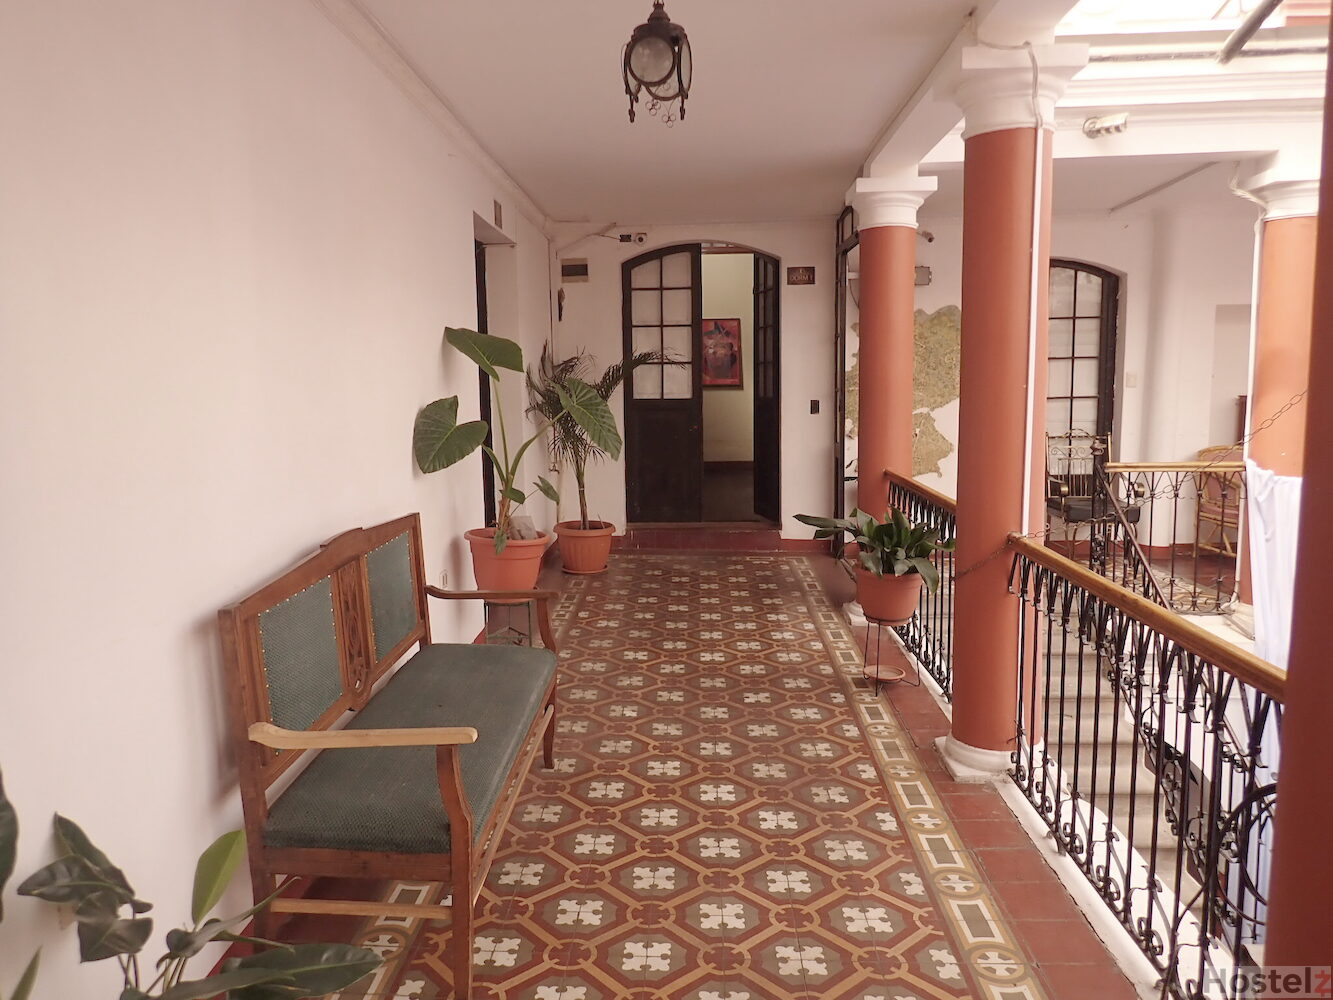 Indoor balcony / common area